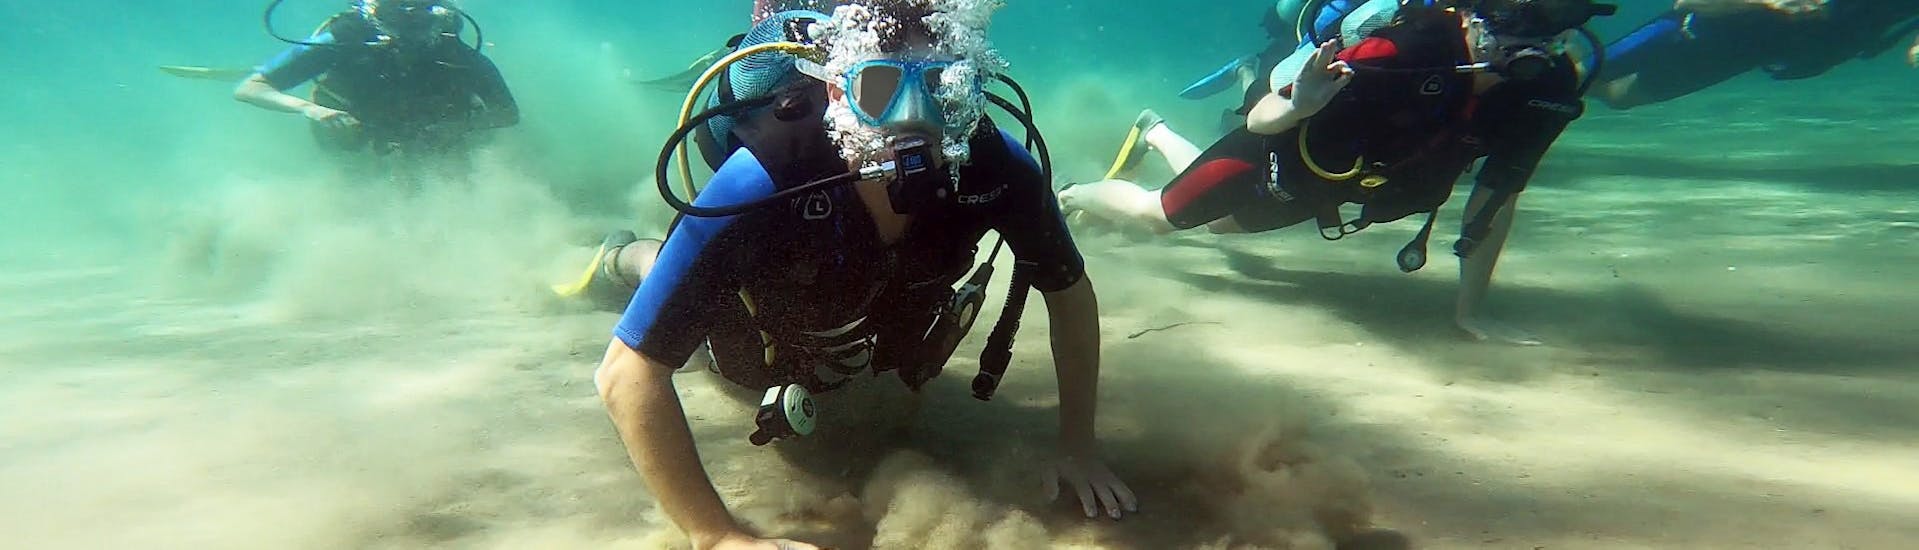 I subacquei durante l'immersione per principianti vicino ad Atene ospitata da Kanelakis Diving Experiences - Dimitris Kanelakis.